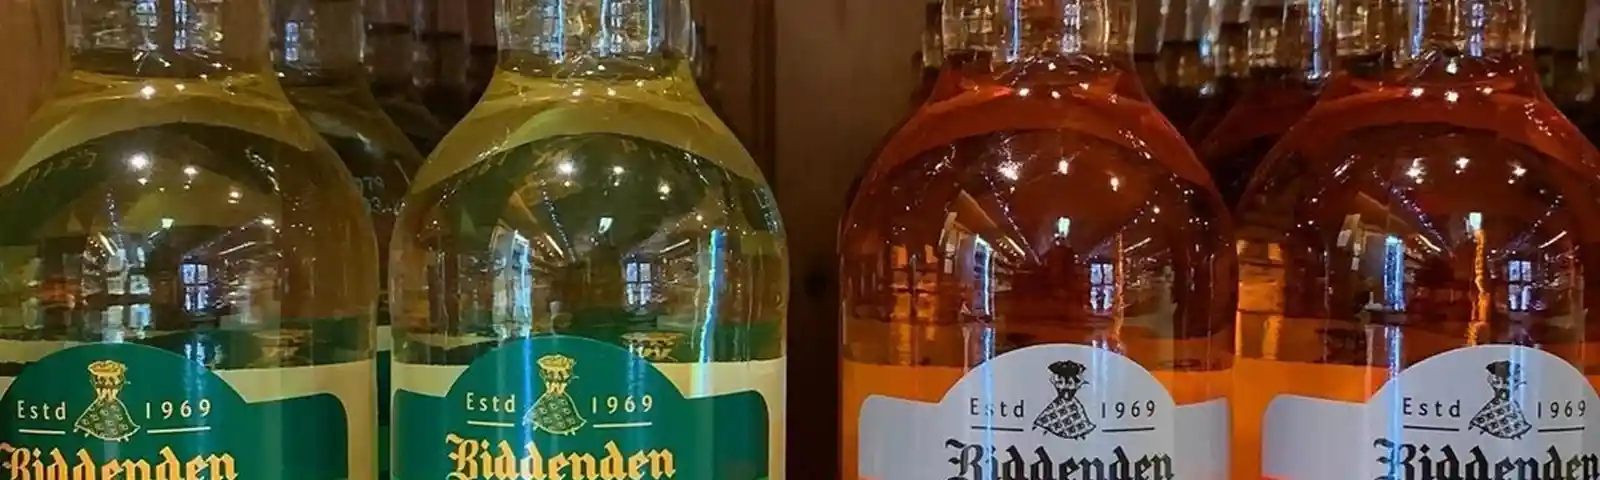 Biddenden Cider (Instgram)